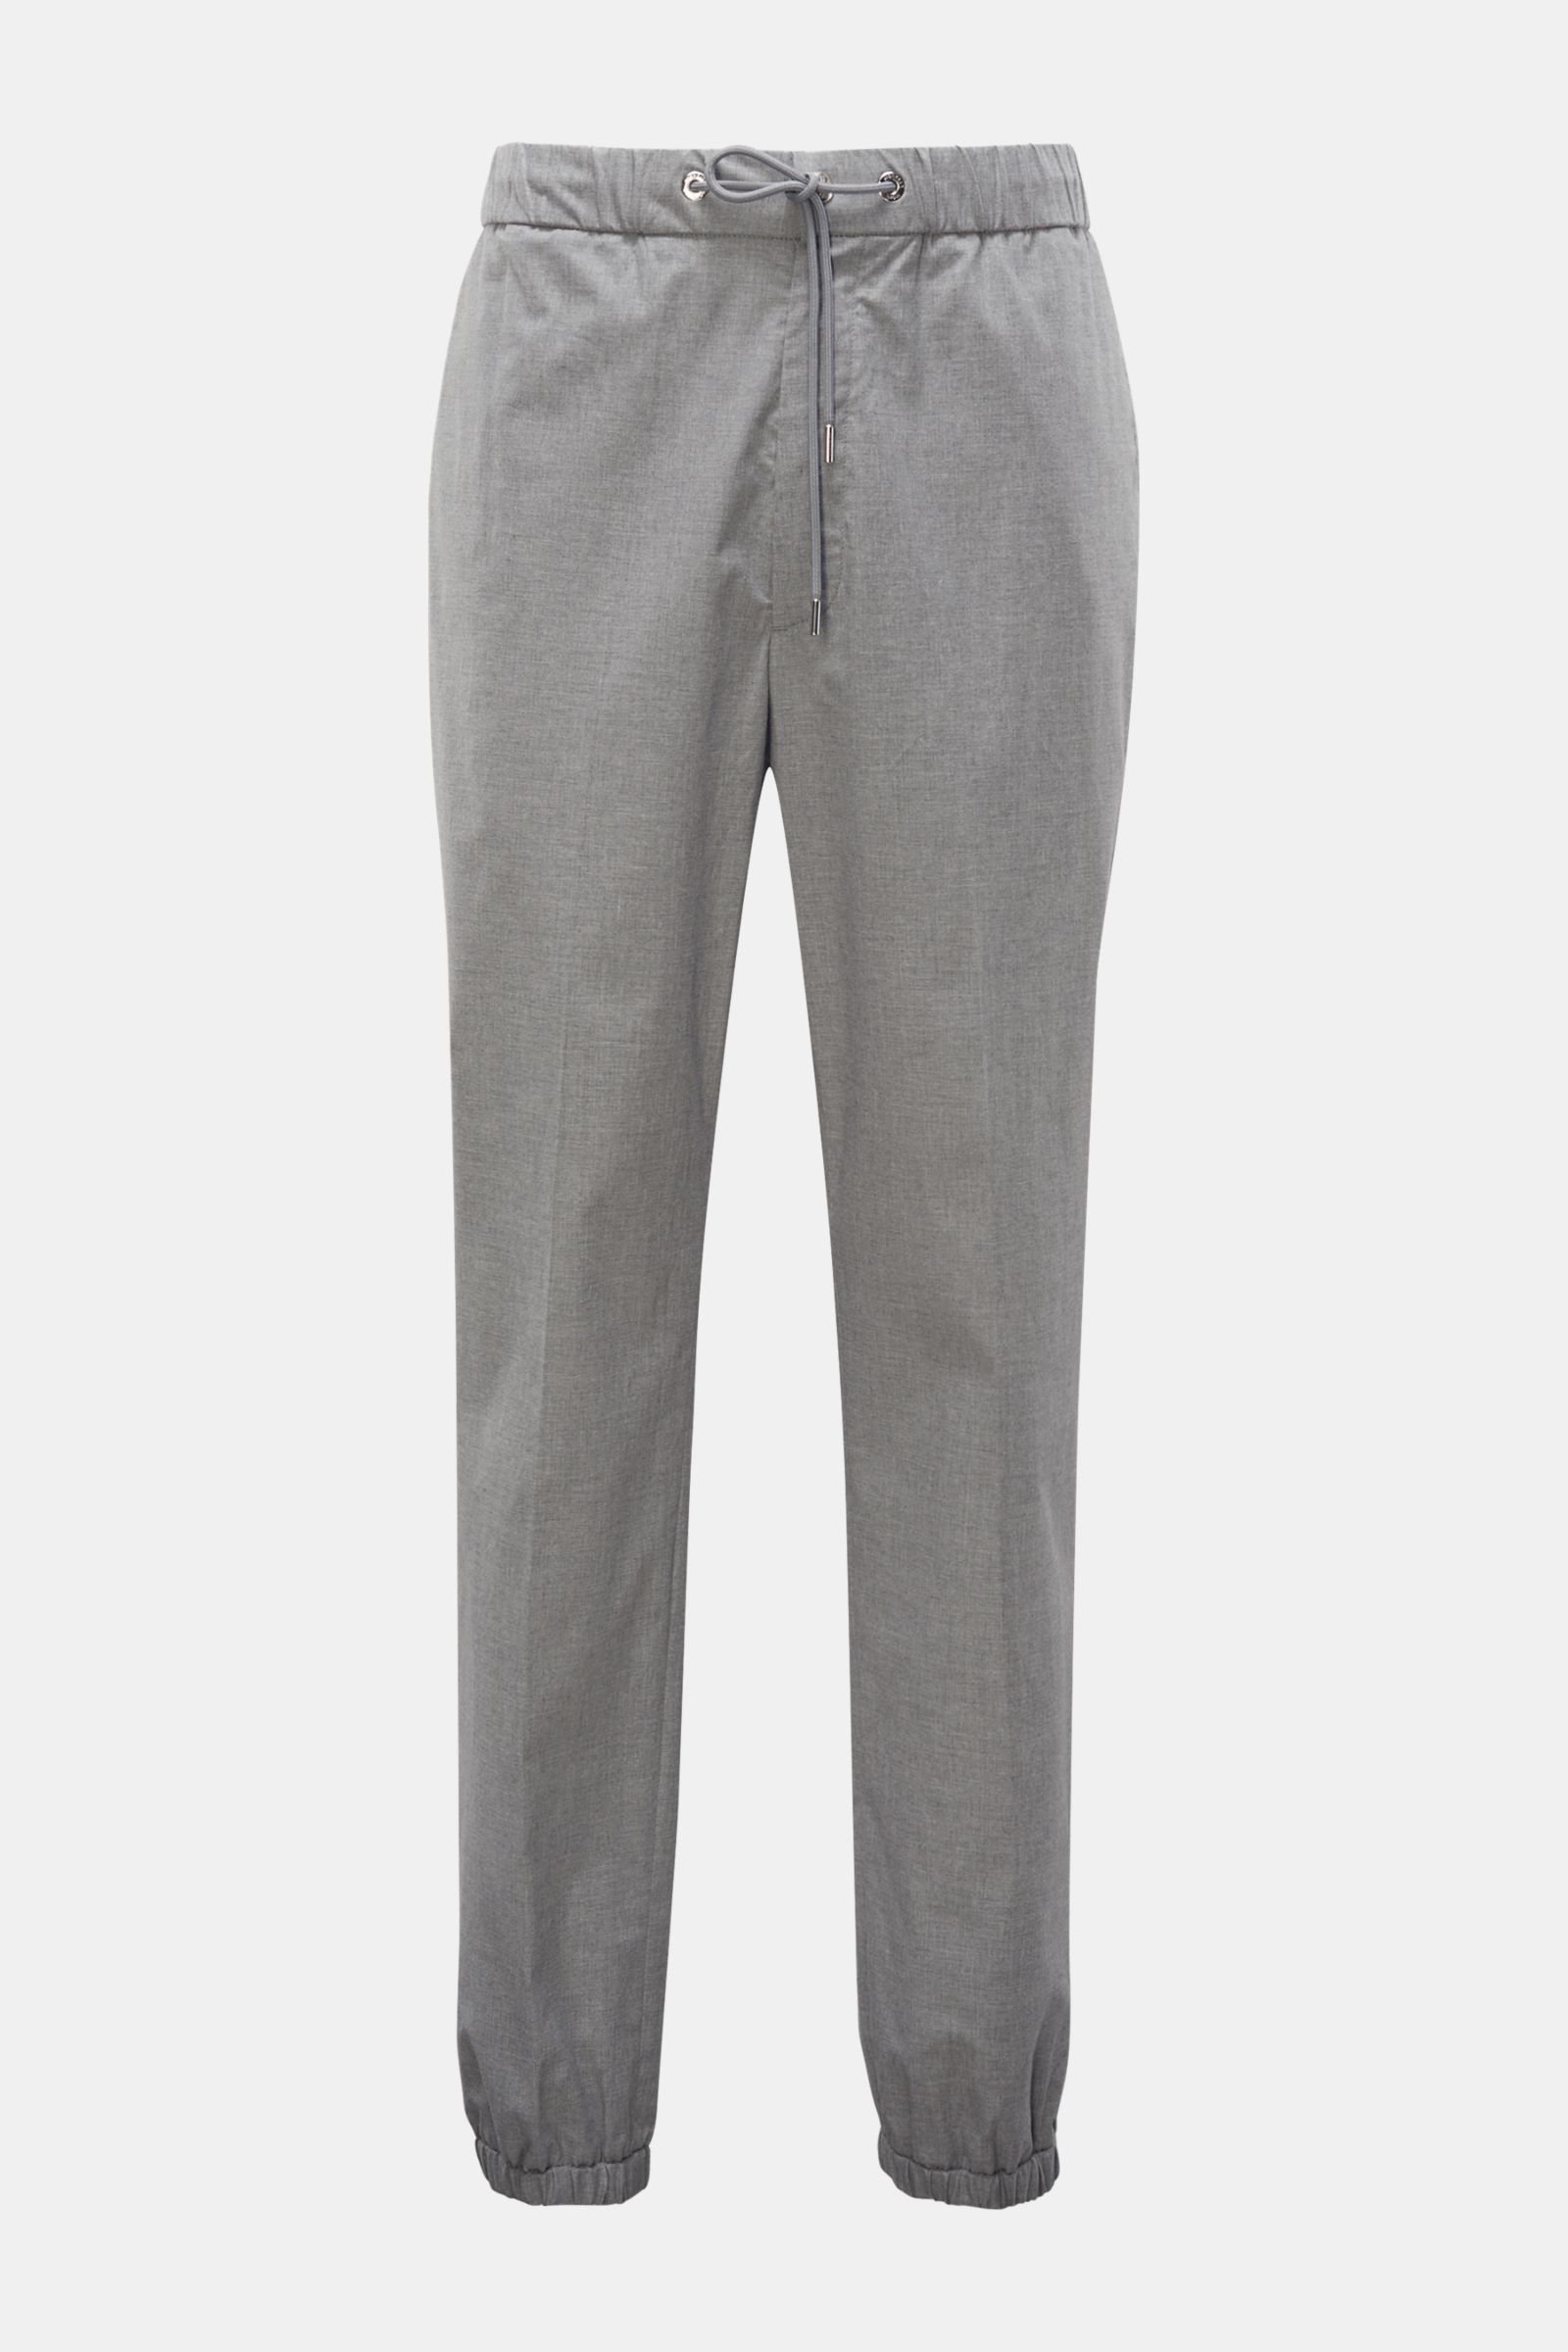 Jogger pants grey 